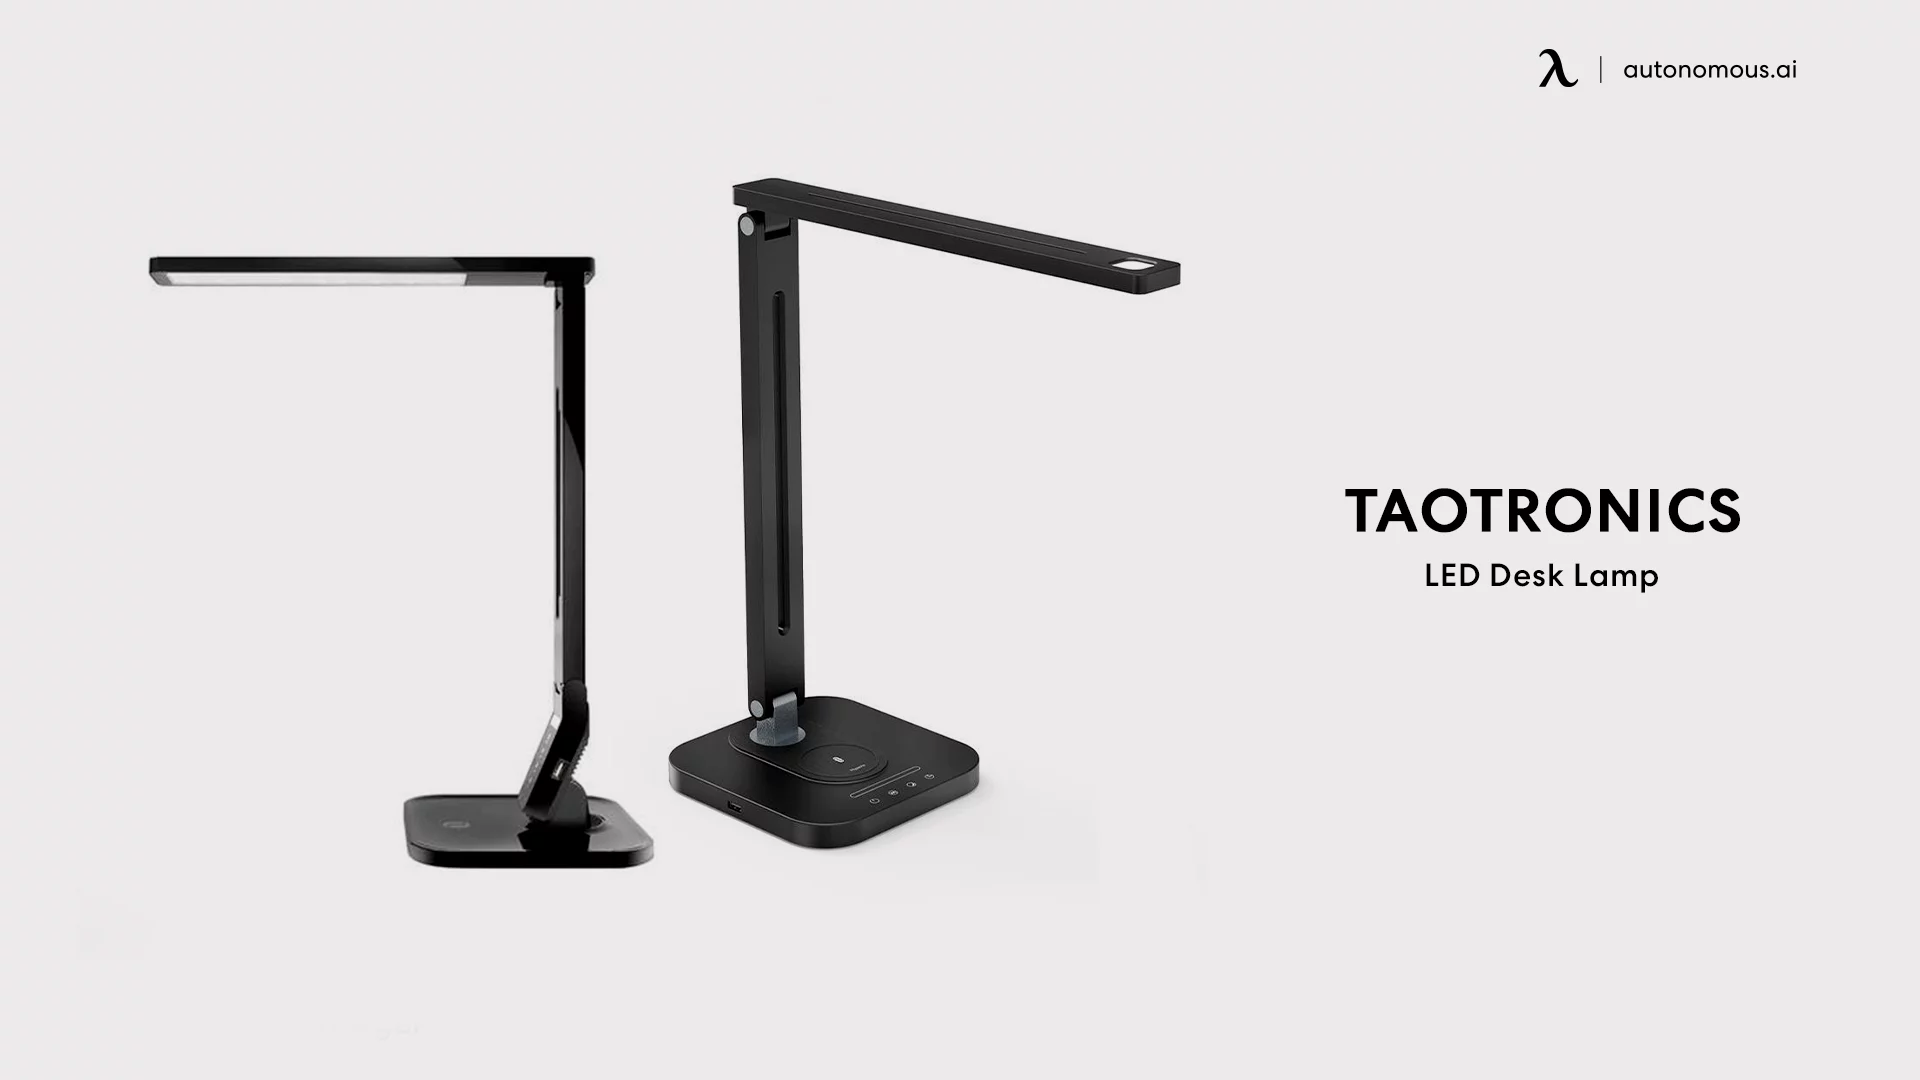 LED Desk Lamp from TaoTronics